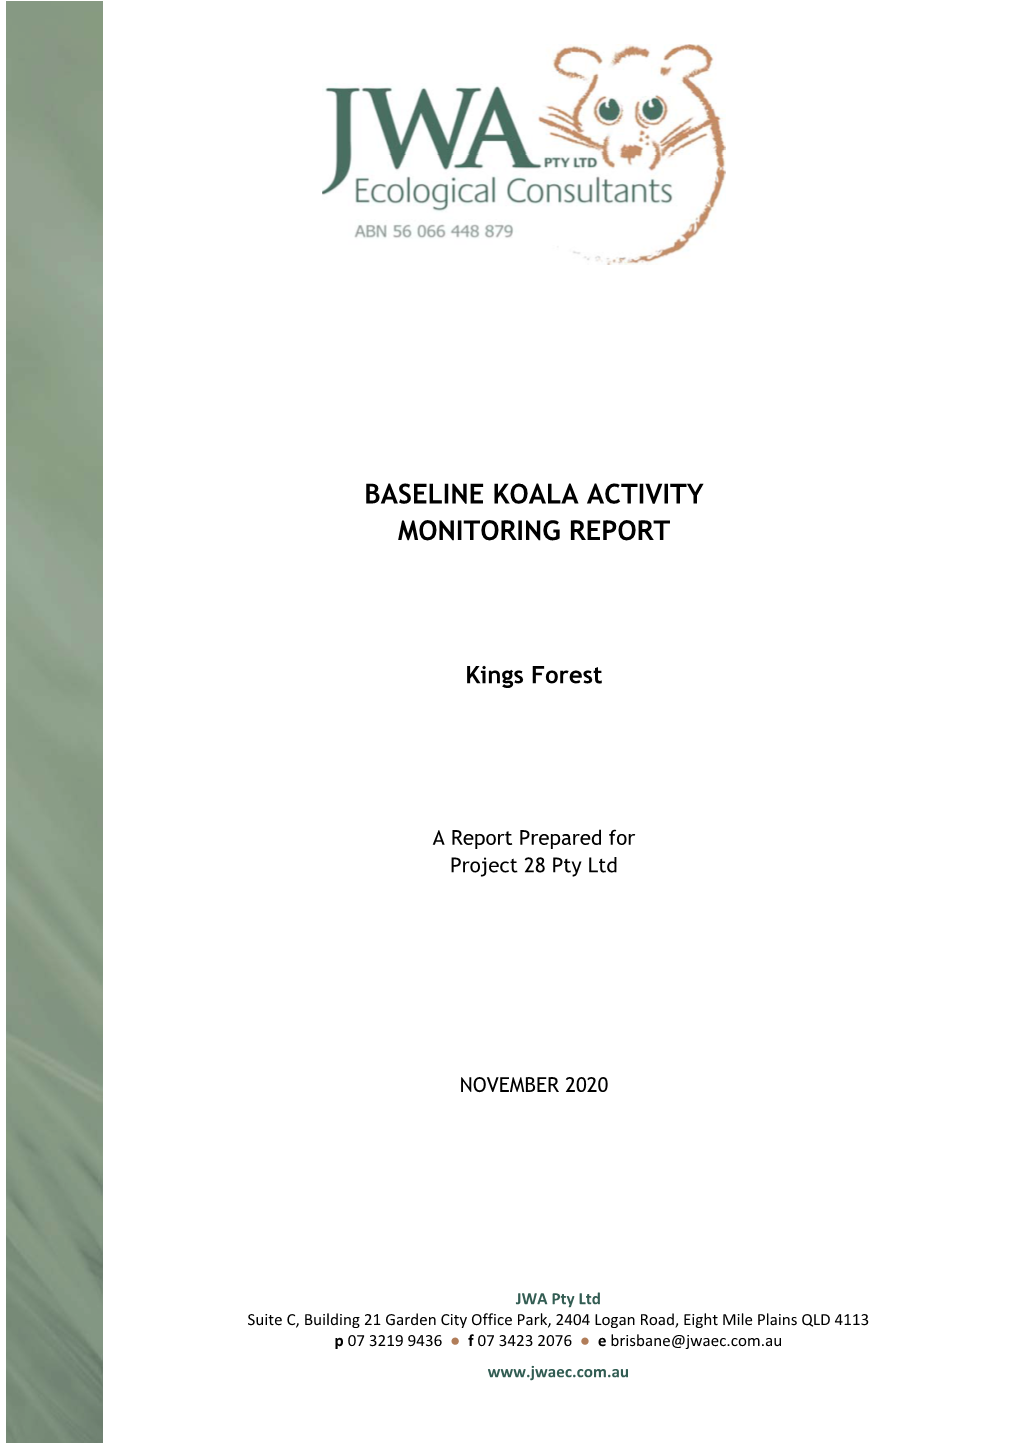 Baseline Koala Activity Monitoring Report